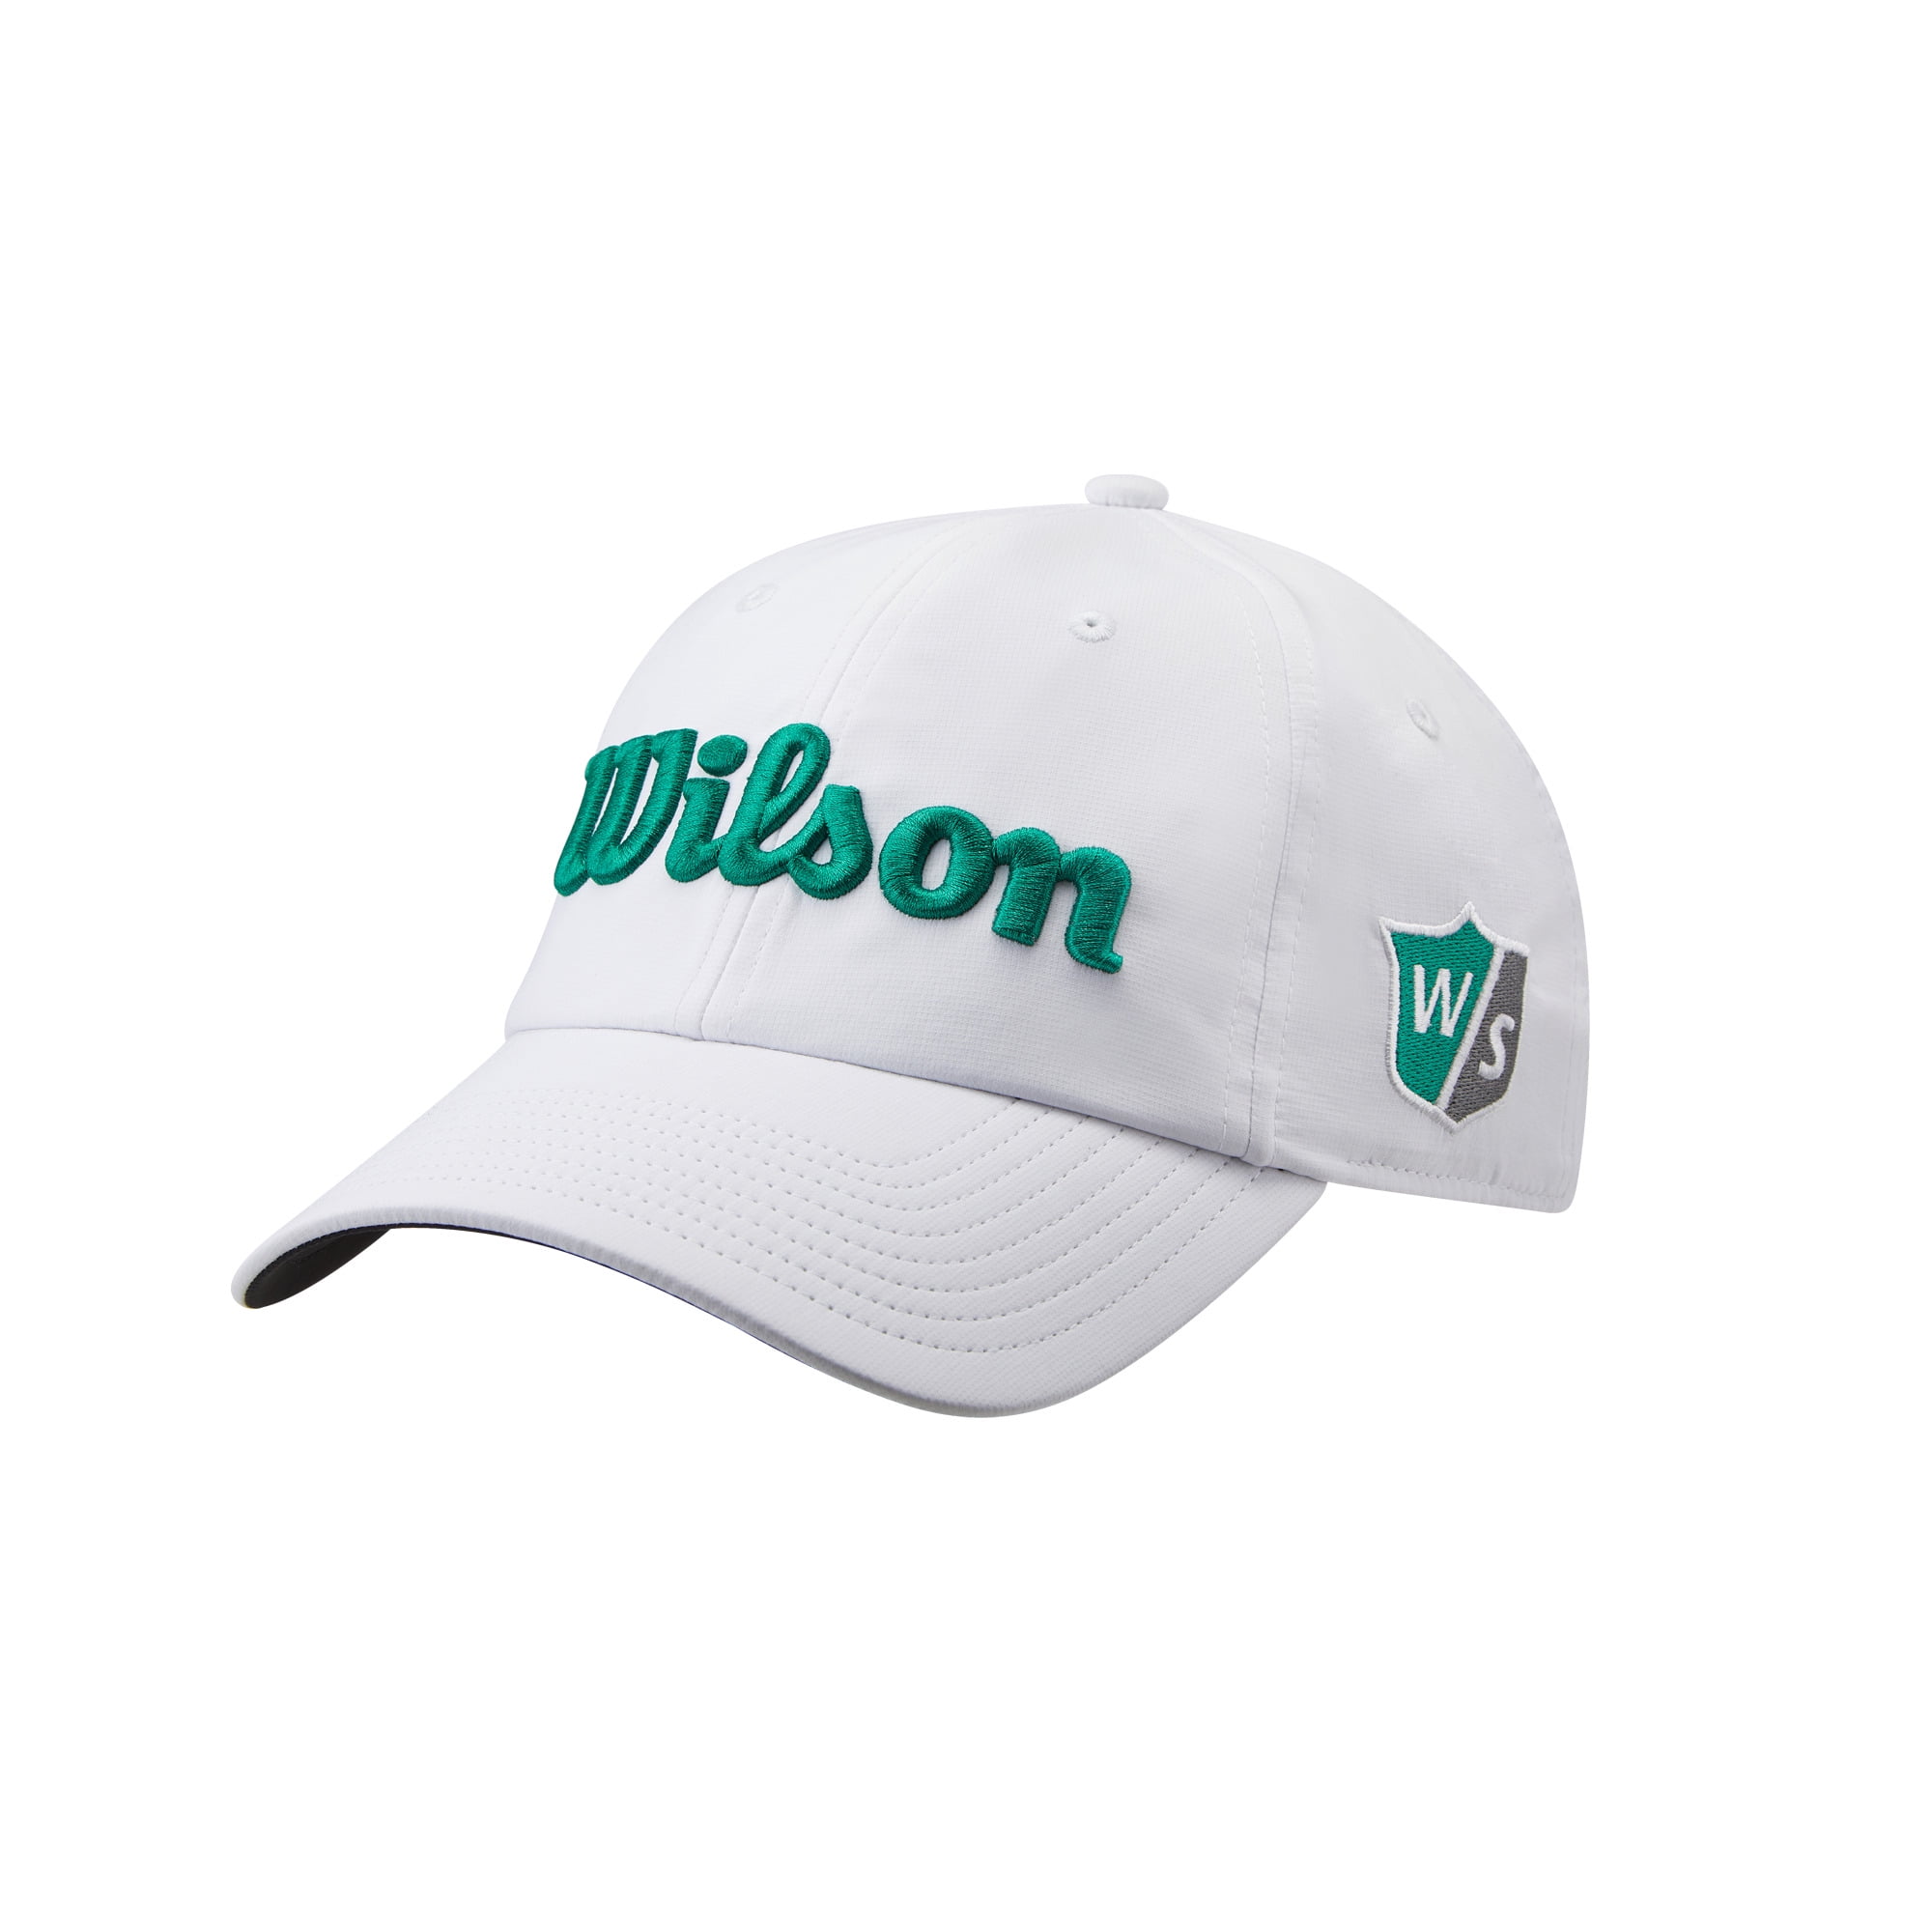 Wilson Men's Pro Tour Golf Hat White and Green - Walmart.com